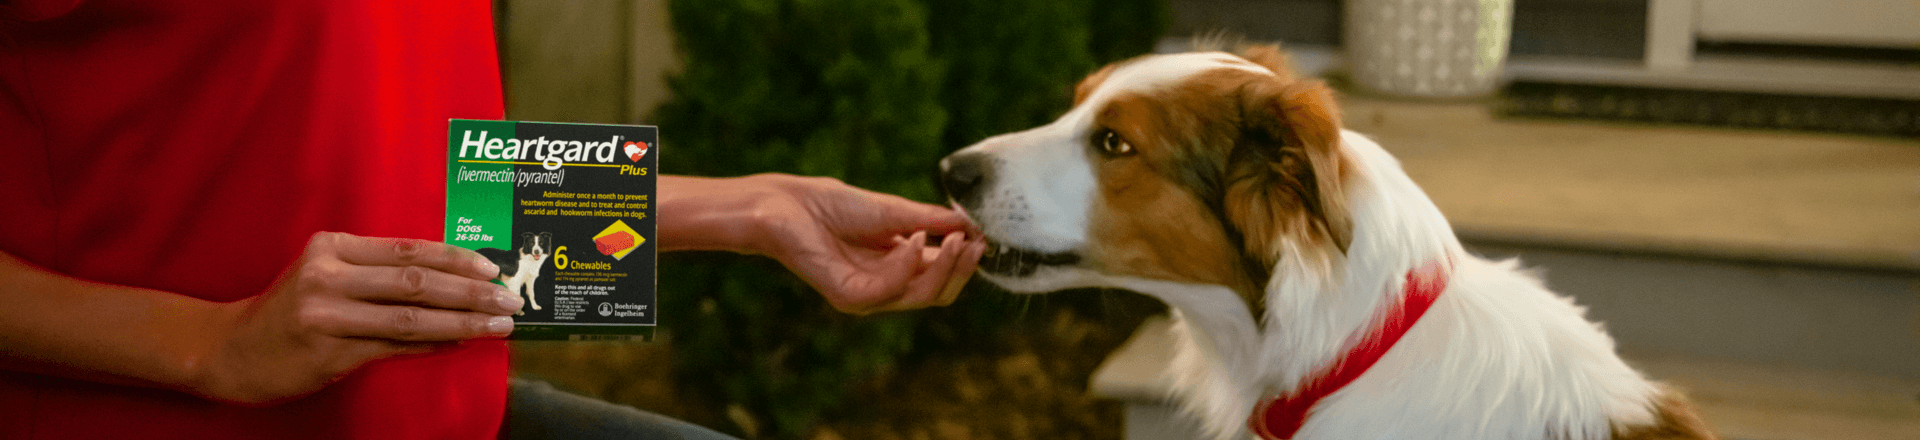 Woman feeds her dog a Heartgard treat